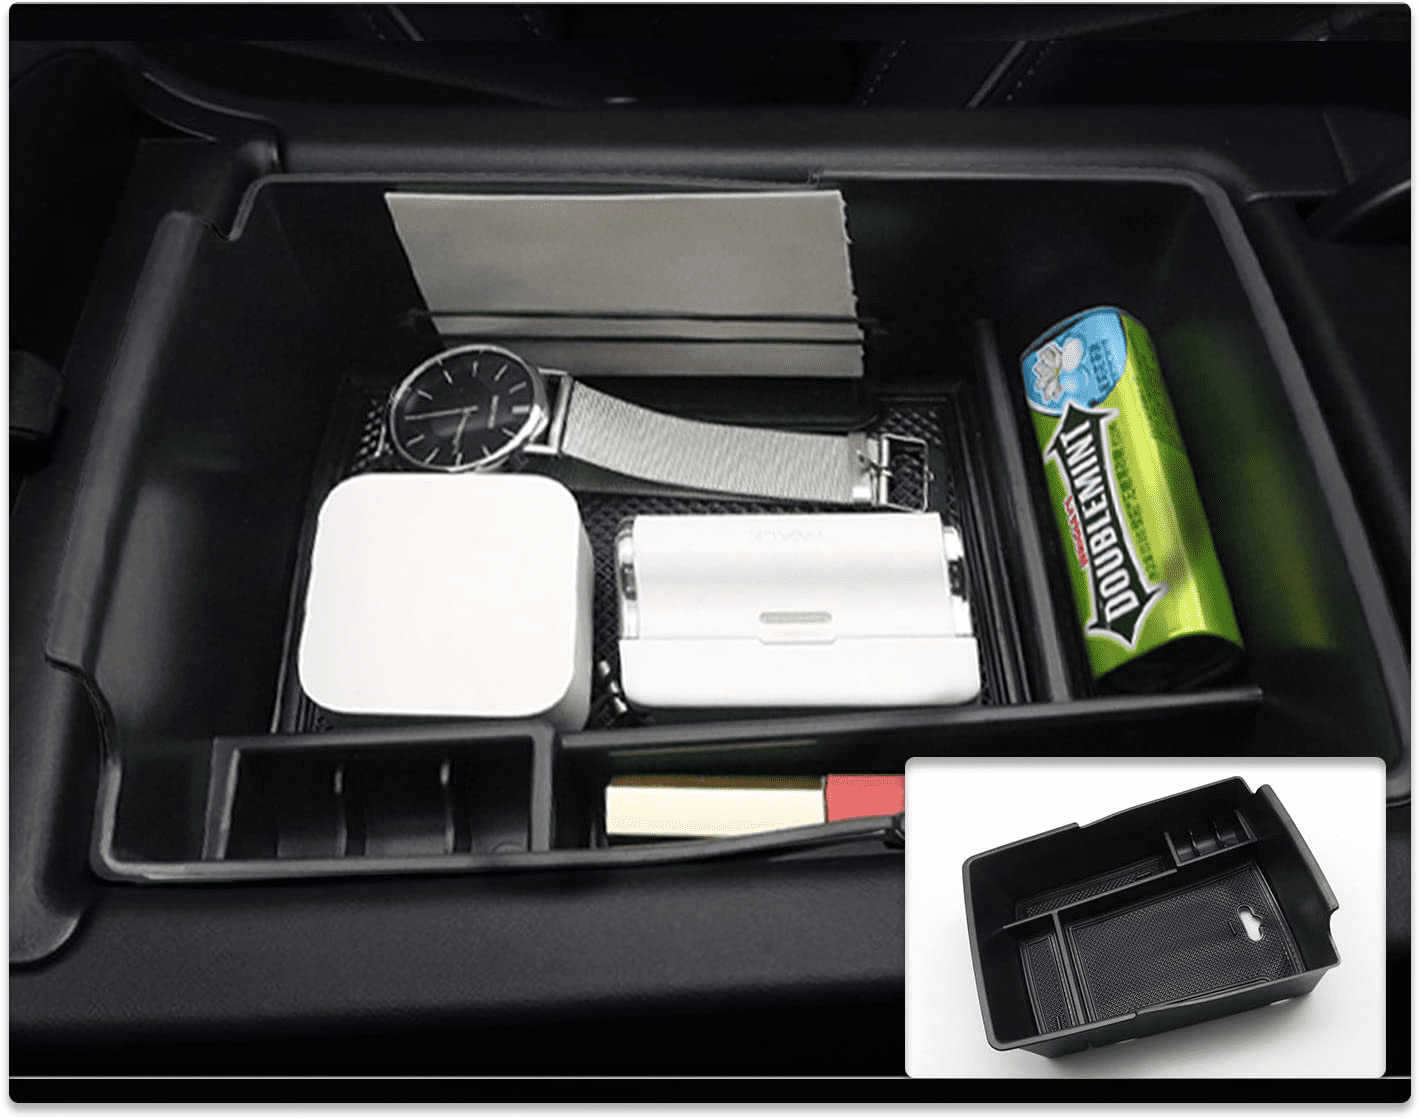 R RUIYA Customized for 2021 Hyundai Santa Fe TM Car Center Console Armrest Box Glove Secondary Storage Console Organizer ABS Tray Pallet with USB Hole and Coin Holder Black-2021 